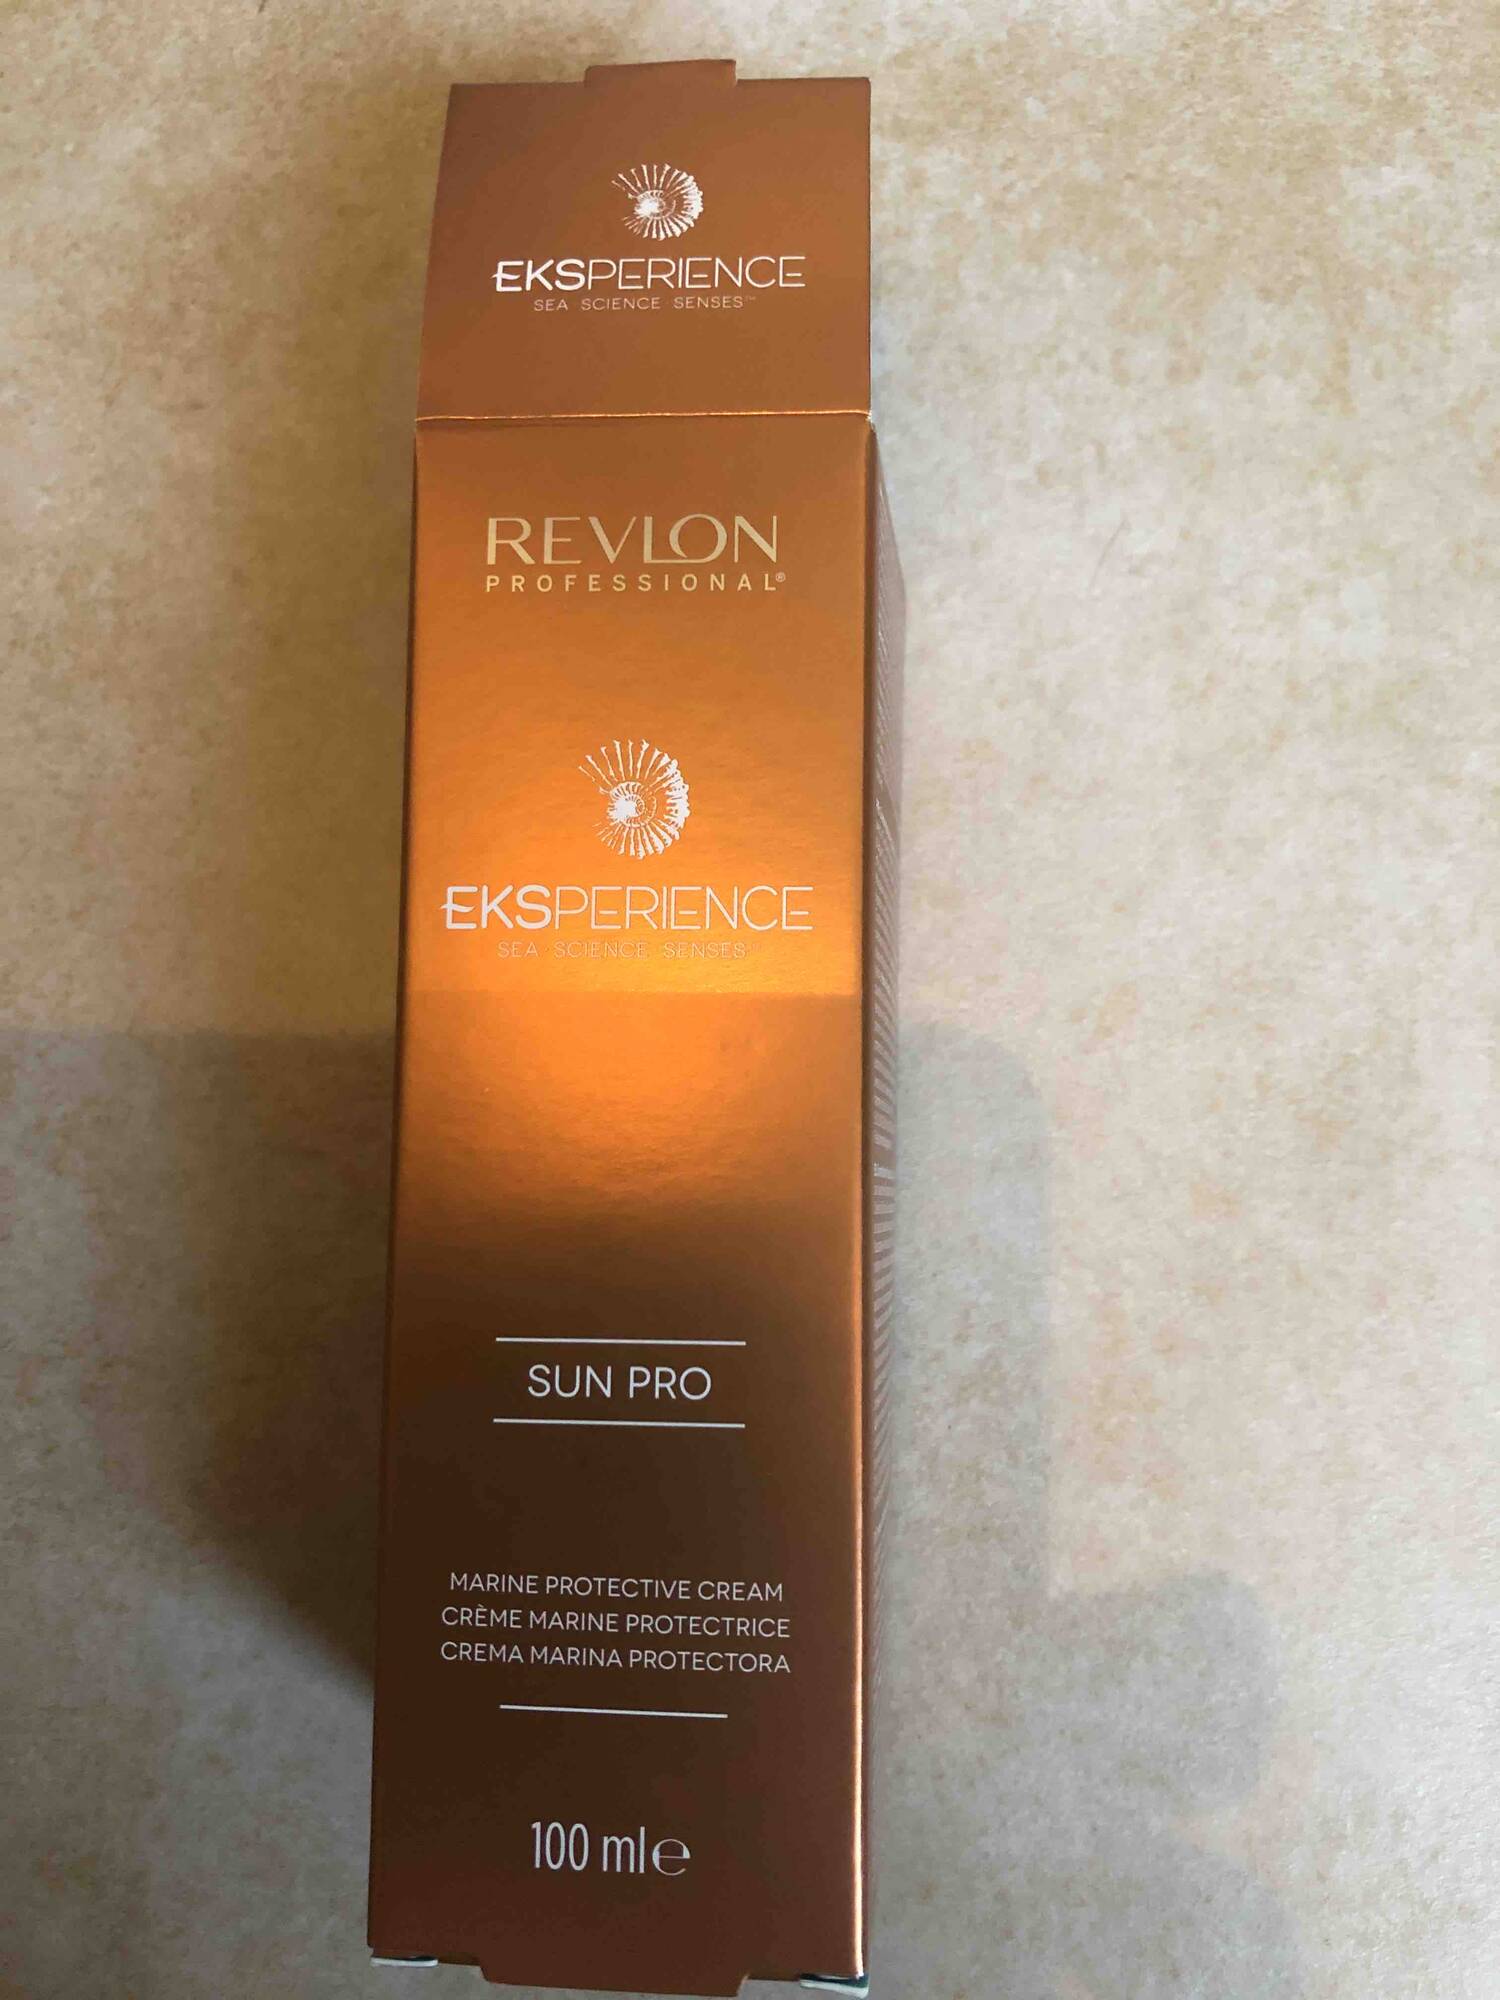 REVLON - Experience sun pro - Crème marine protectrice